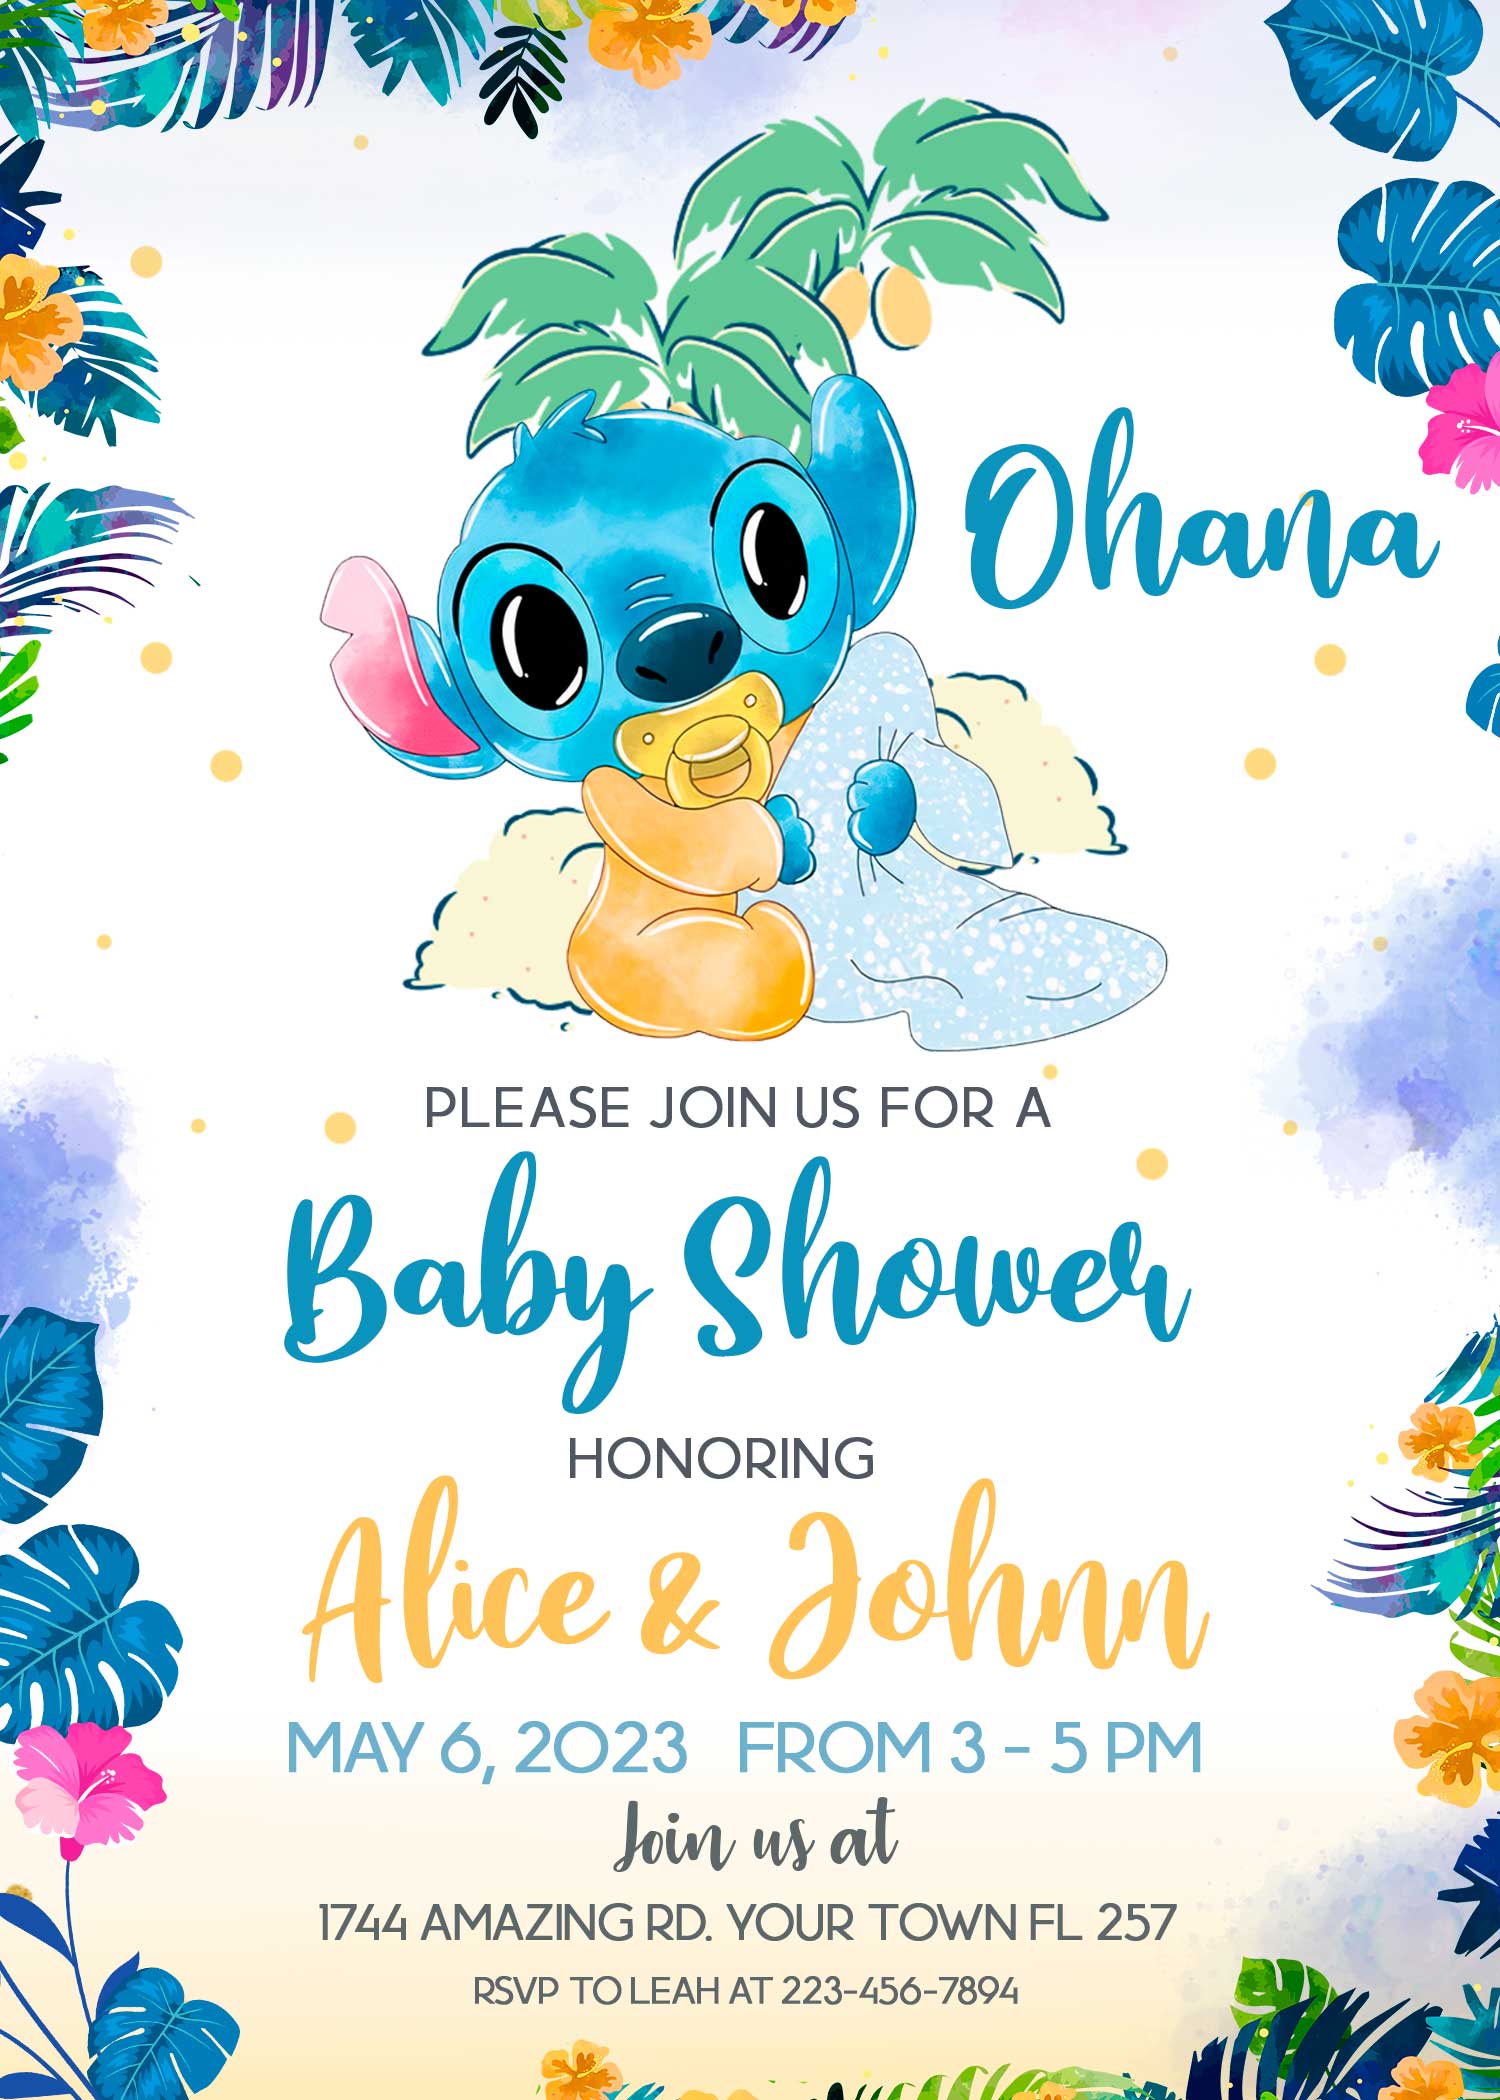 Stitch Baby Shower Invitation - oscarsitosroom, great price 6.00$